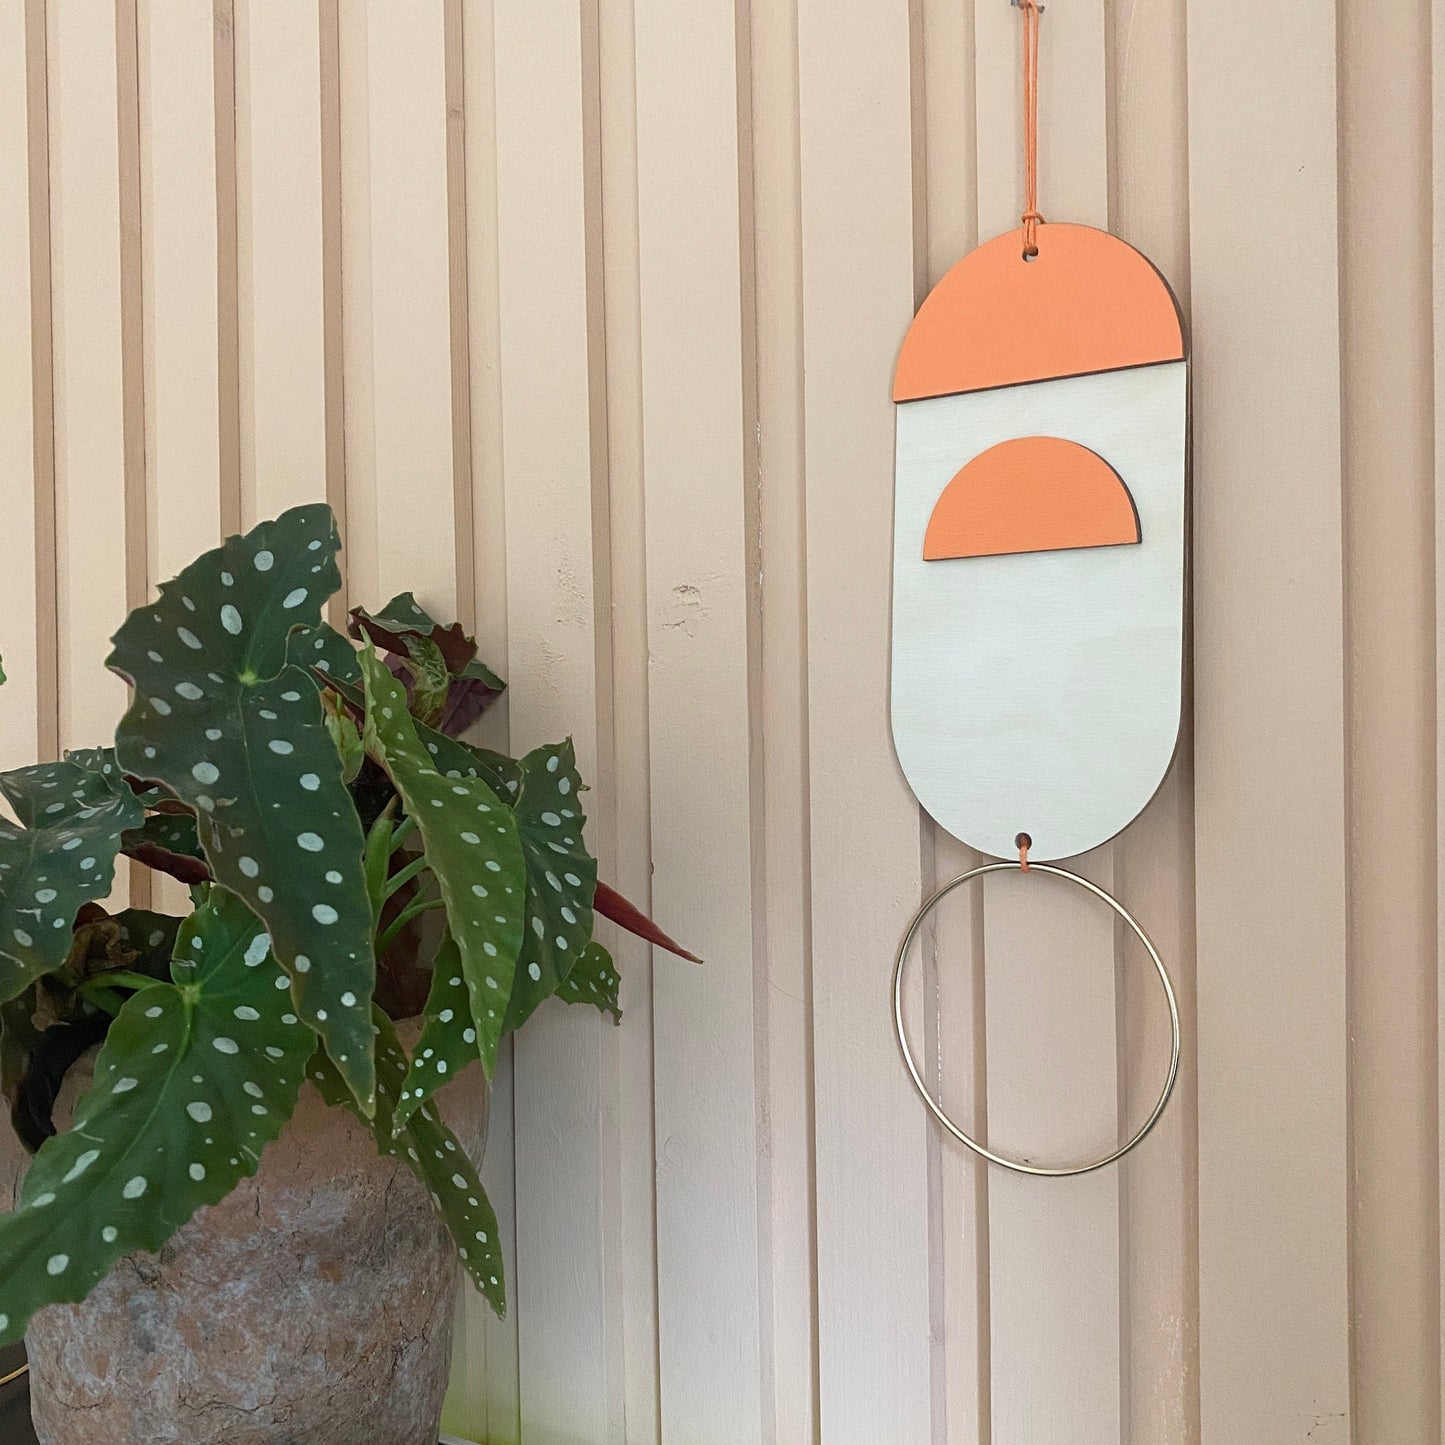 Minimalistic Mono Bright Art - Contemporary Art - Orange Wall Hanging - Modern Simple Decor - Unique Home Decor - Small Wall Hanging - Plain